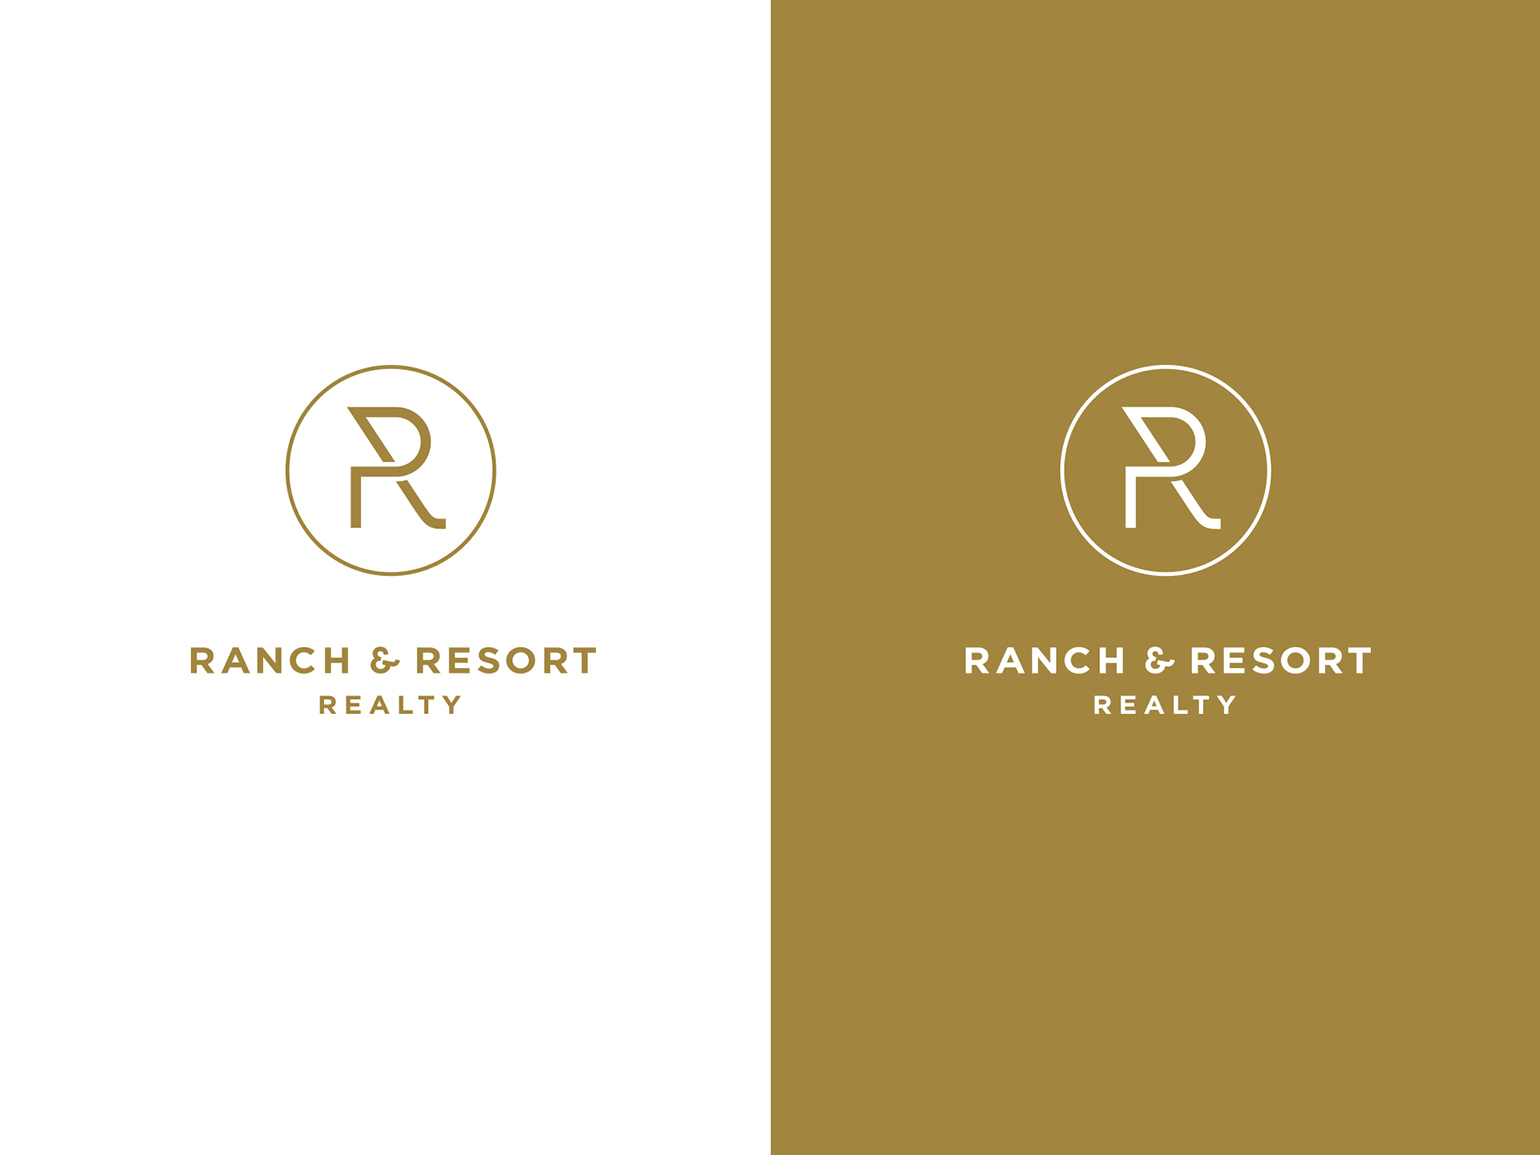 Ranch & Resort Realty 2